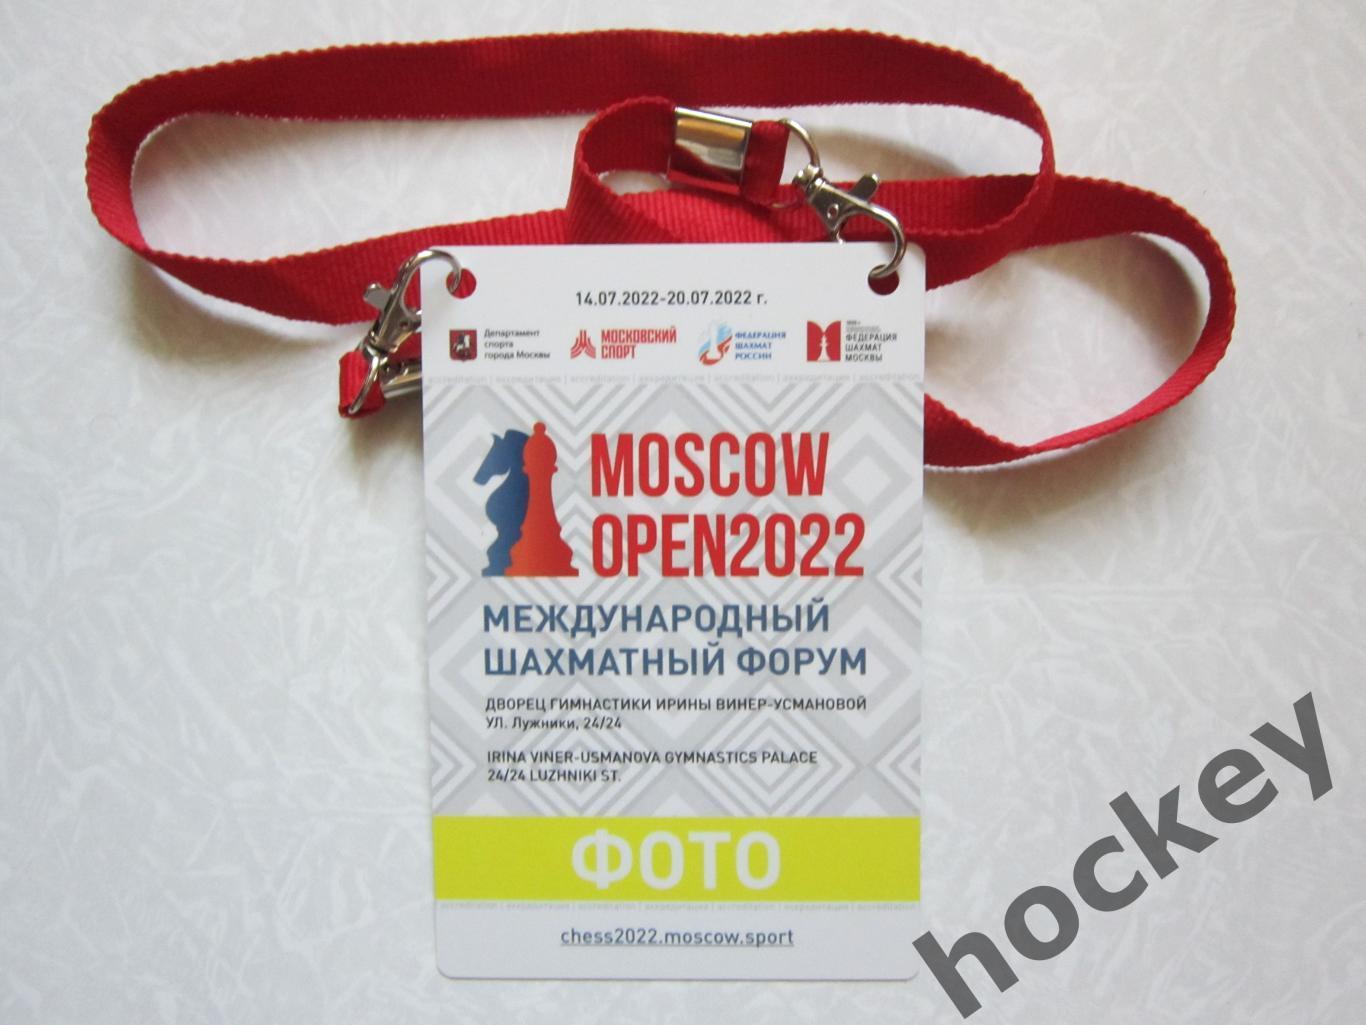 Moscow Open 2022. Международный шахматный форум. Аккредитация Фото + шнурок